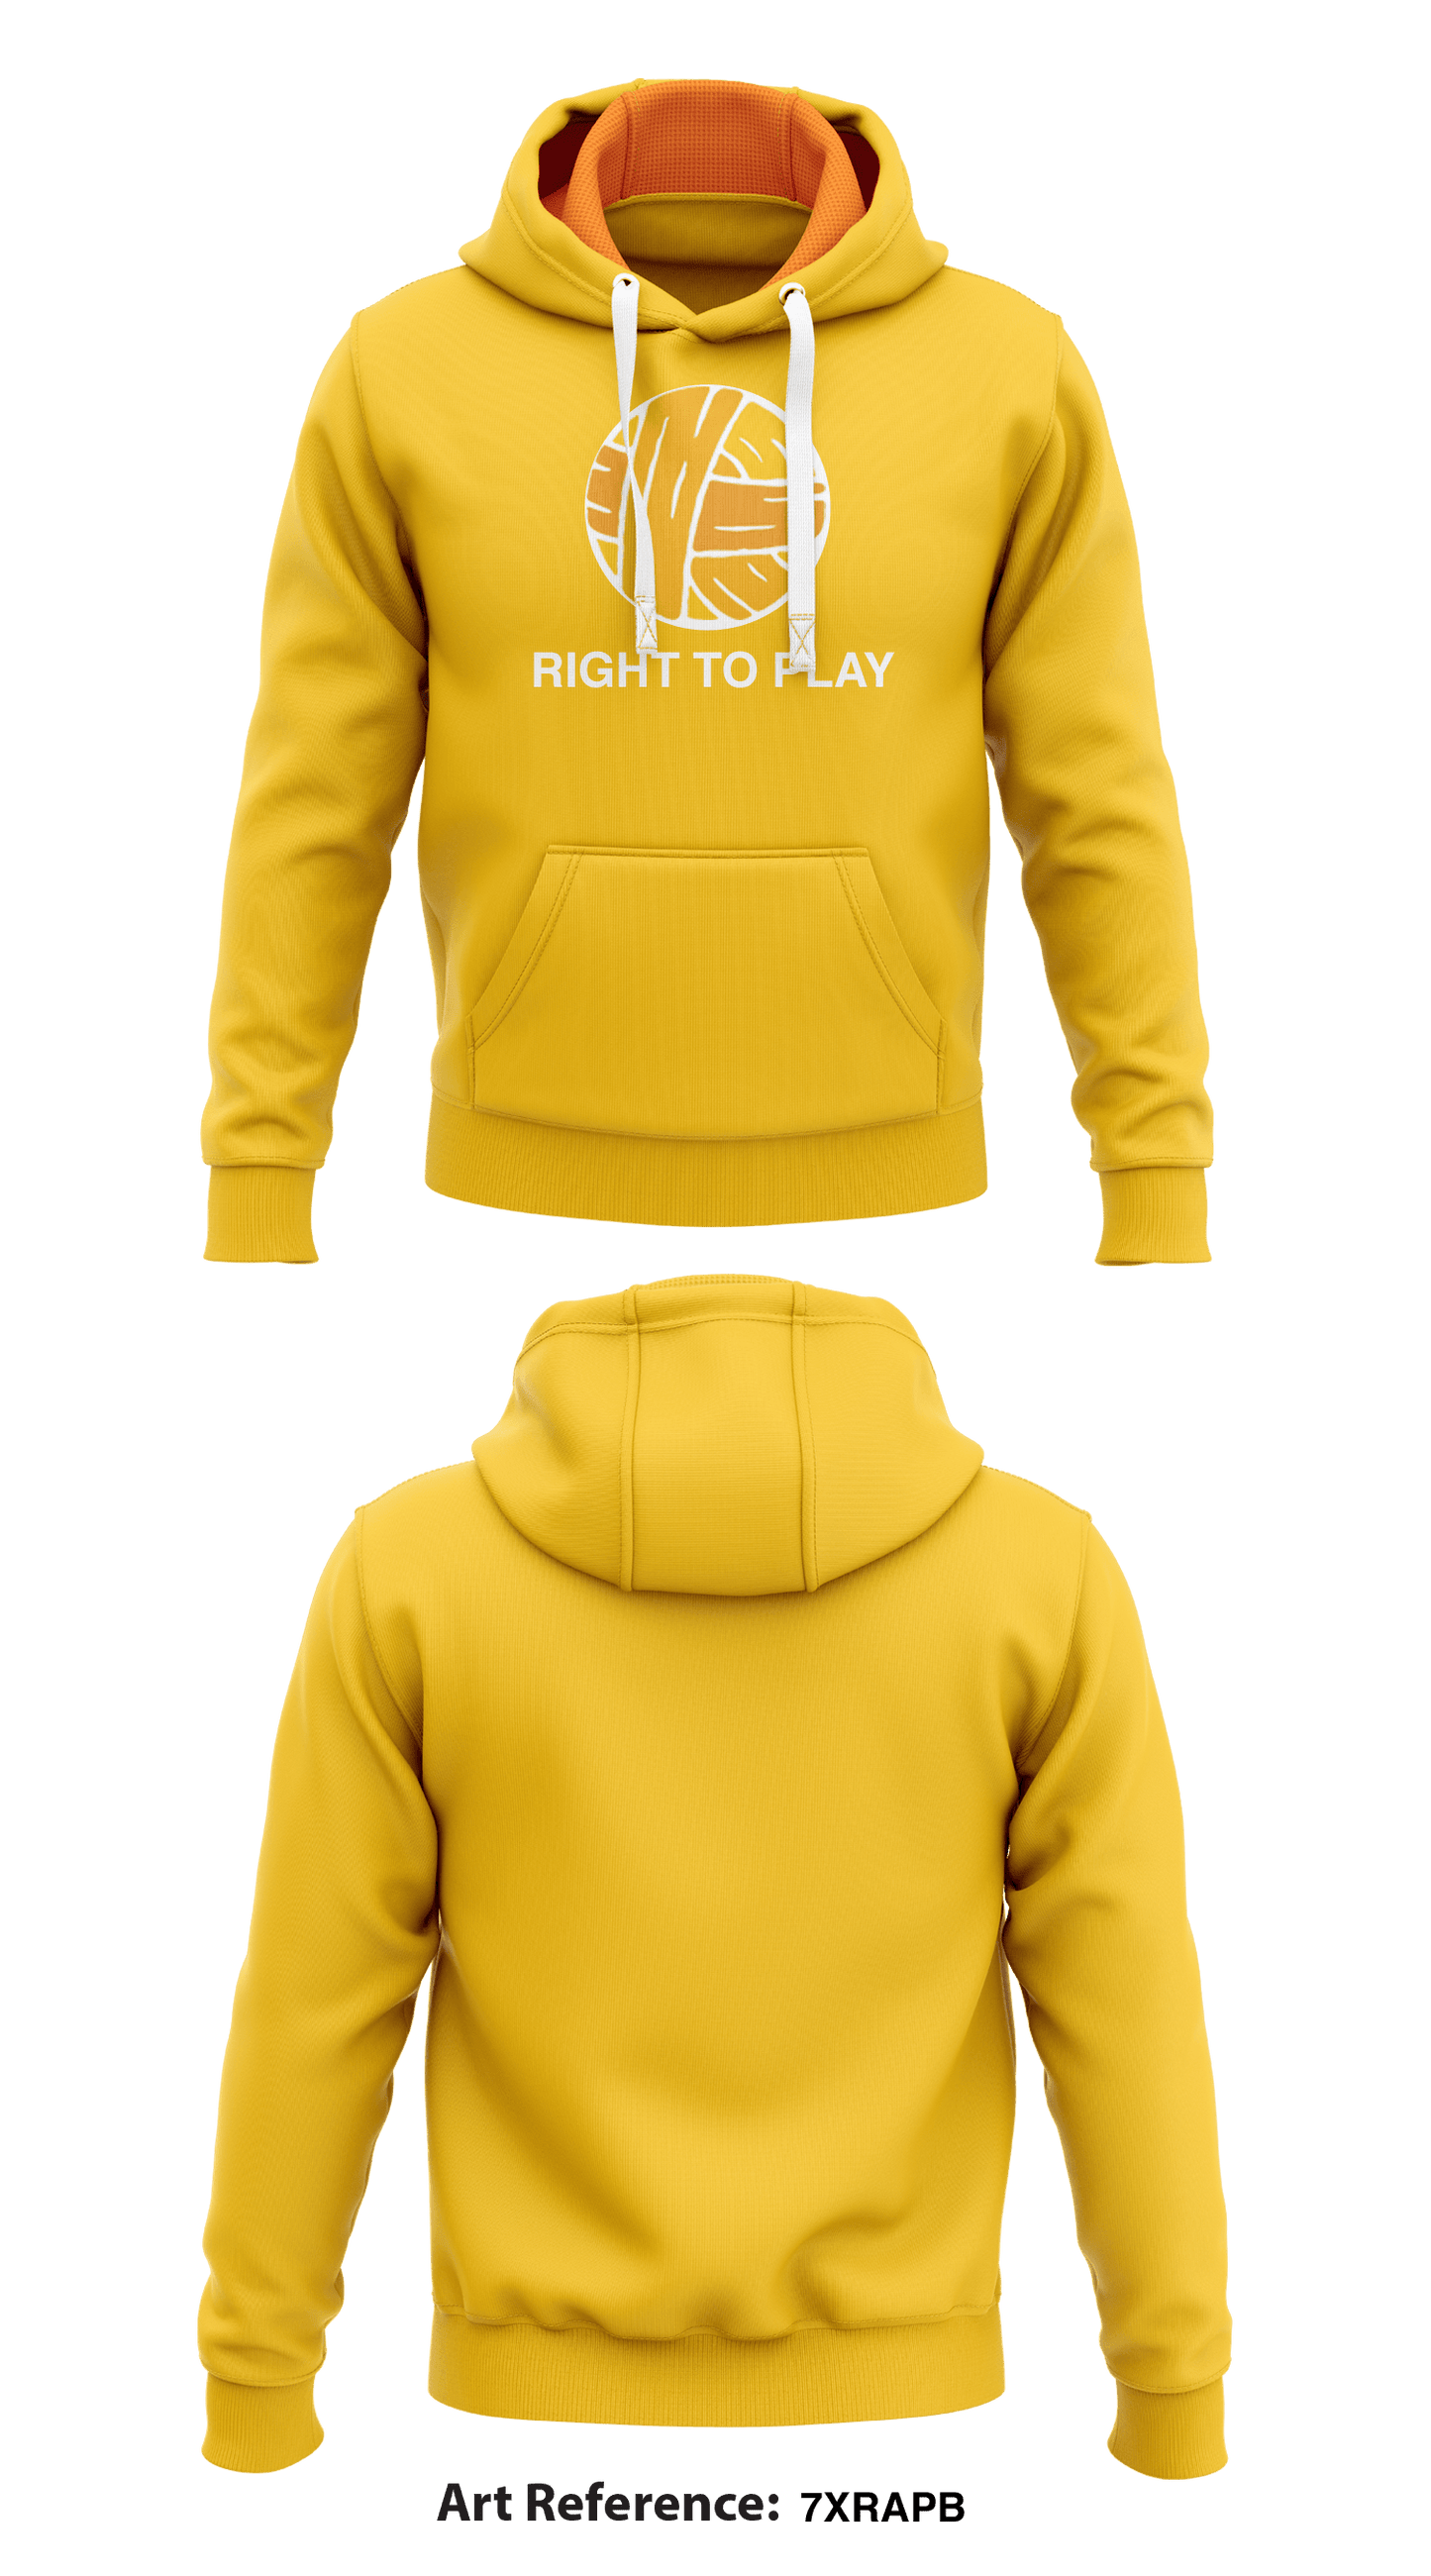 Right to Play  Core Men's Hooded Performance Sweatshirt - 7xrAPb